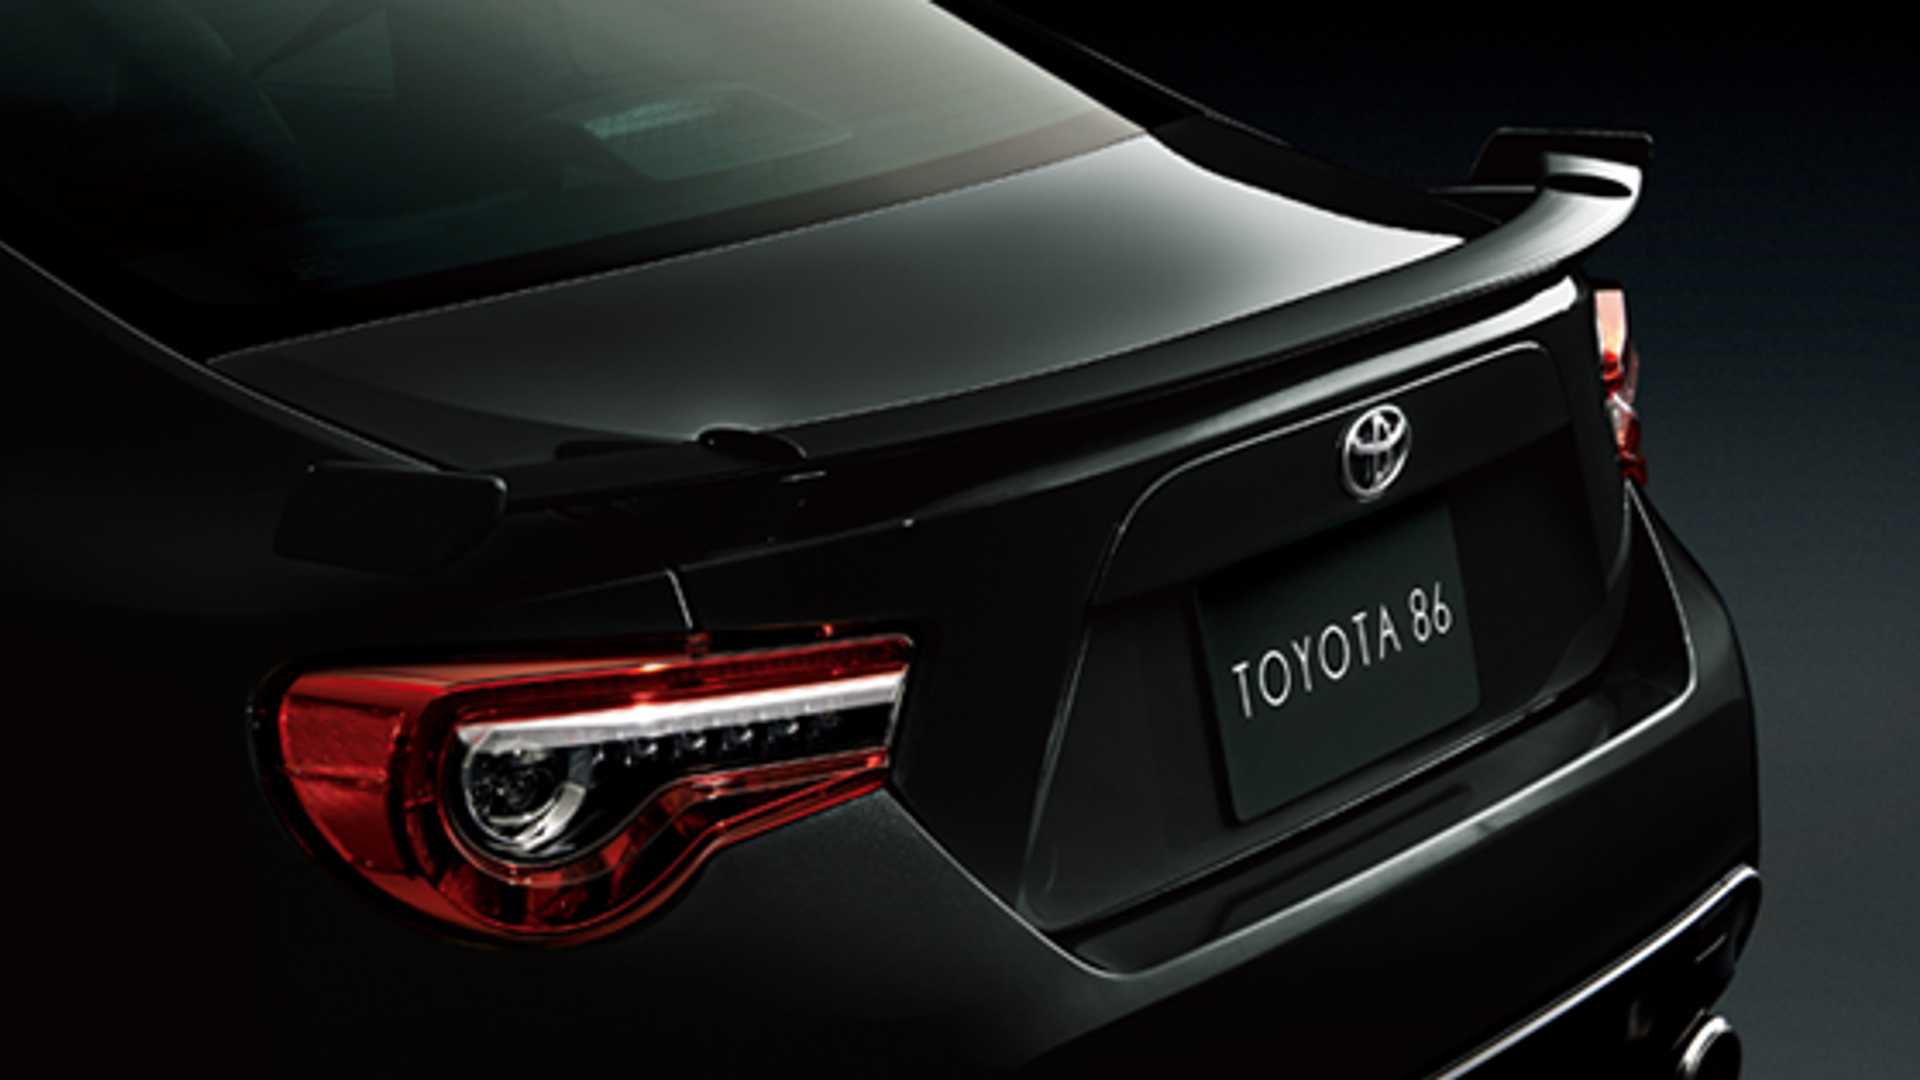 Toyota GT86 Black Limited: 86 unidades limitadas al mercado japonés